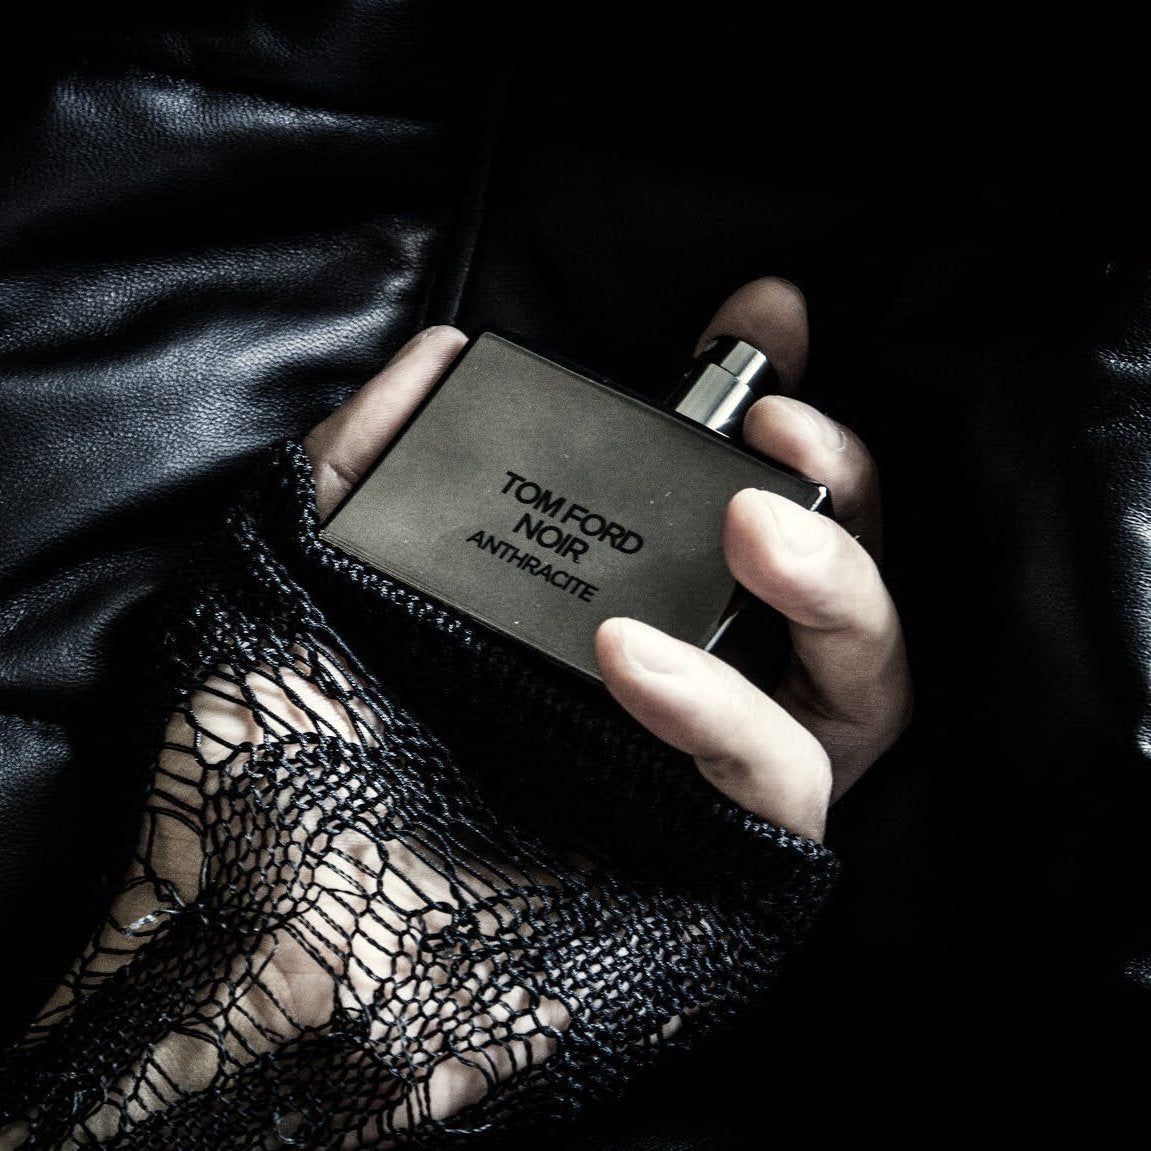 Tom Ford Noir Anthracite EDP - My Perfume Shop Australia